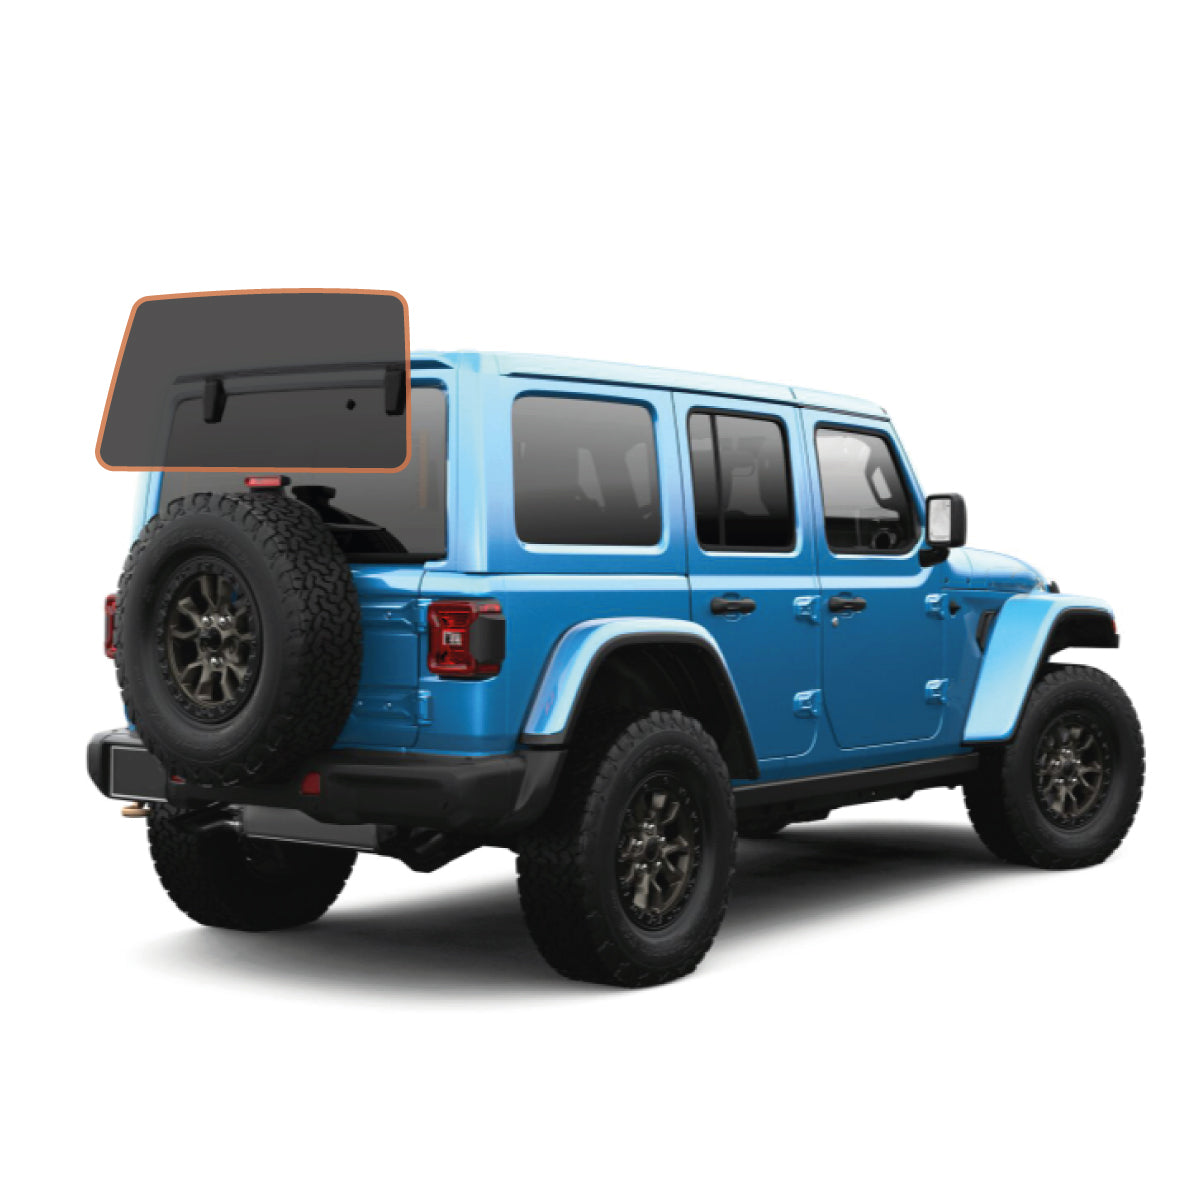 MotoShield Pro Premium Professional 2mil Precut Ceramic Window Tint Film for 2011-2017 Jeep Wrangler 4 Door Hard Top — (Solid Rear Windshield 15%) + Lifetime Warranty